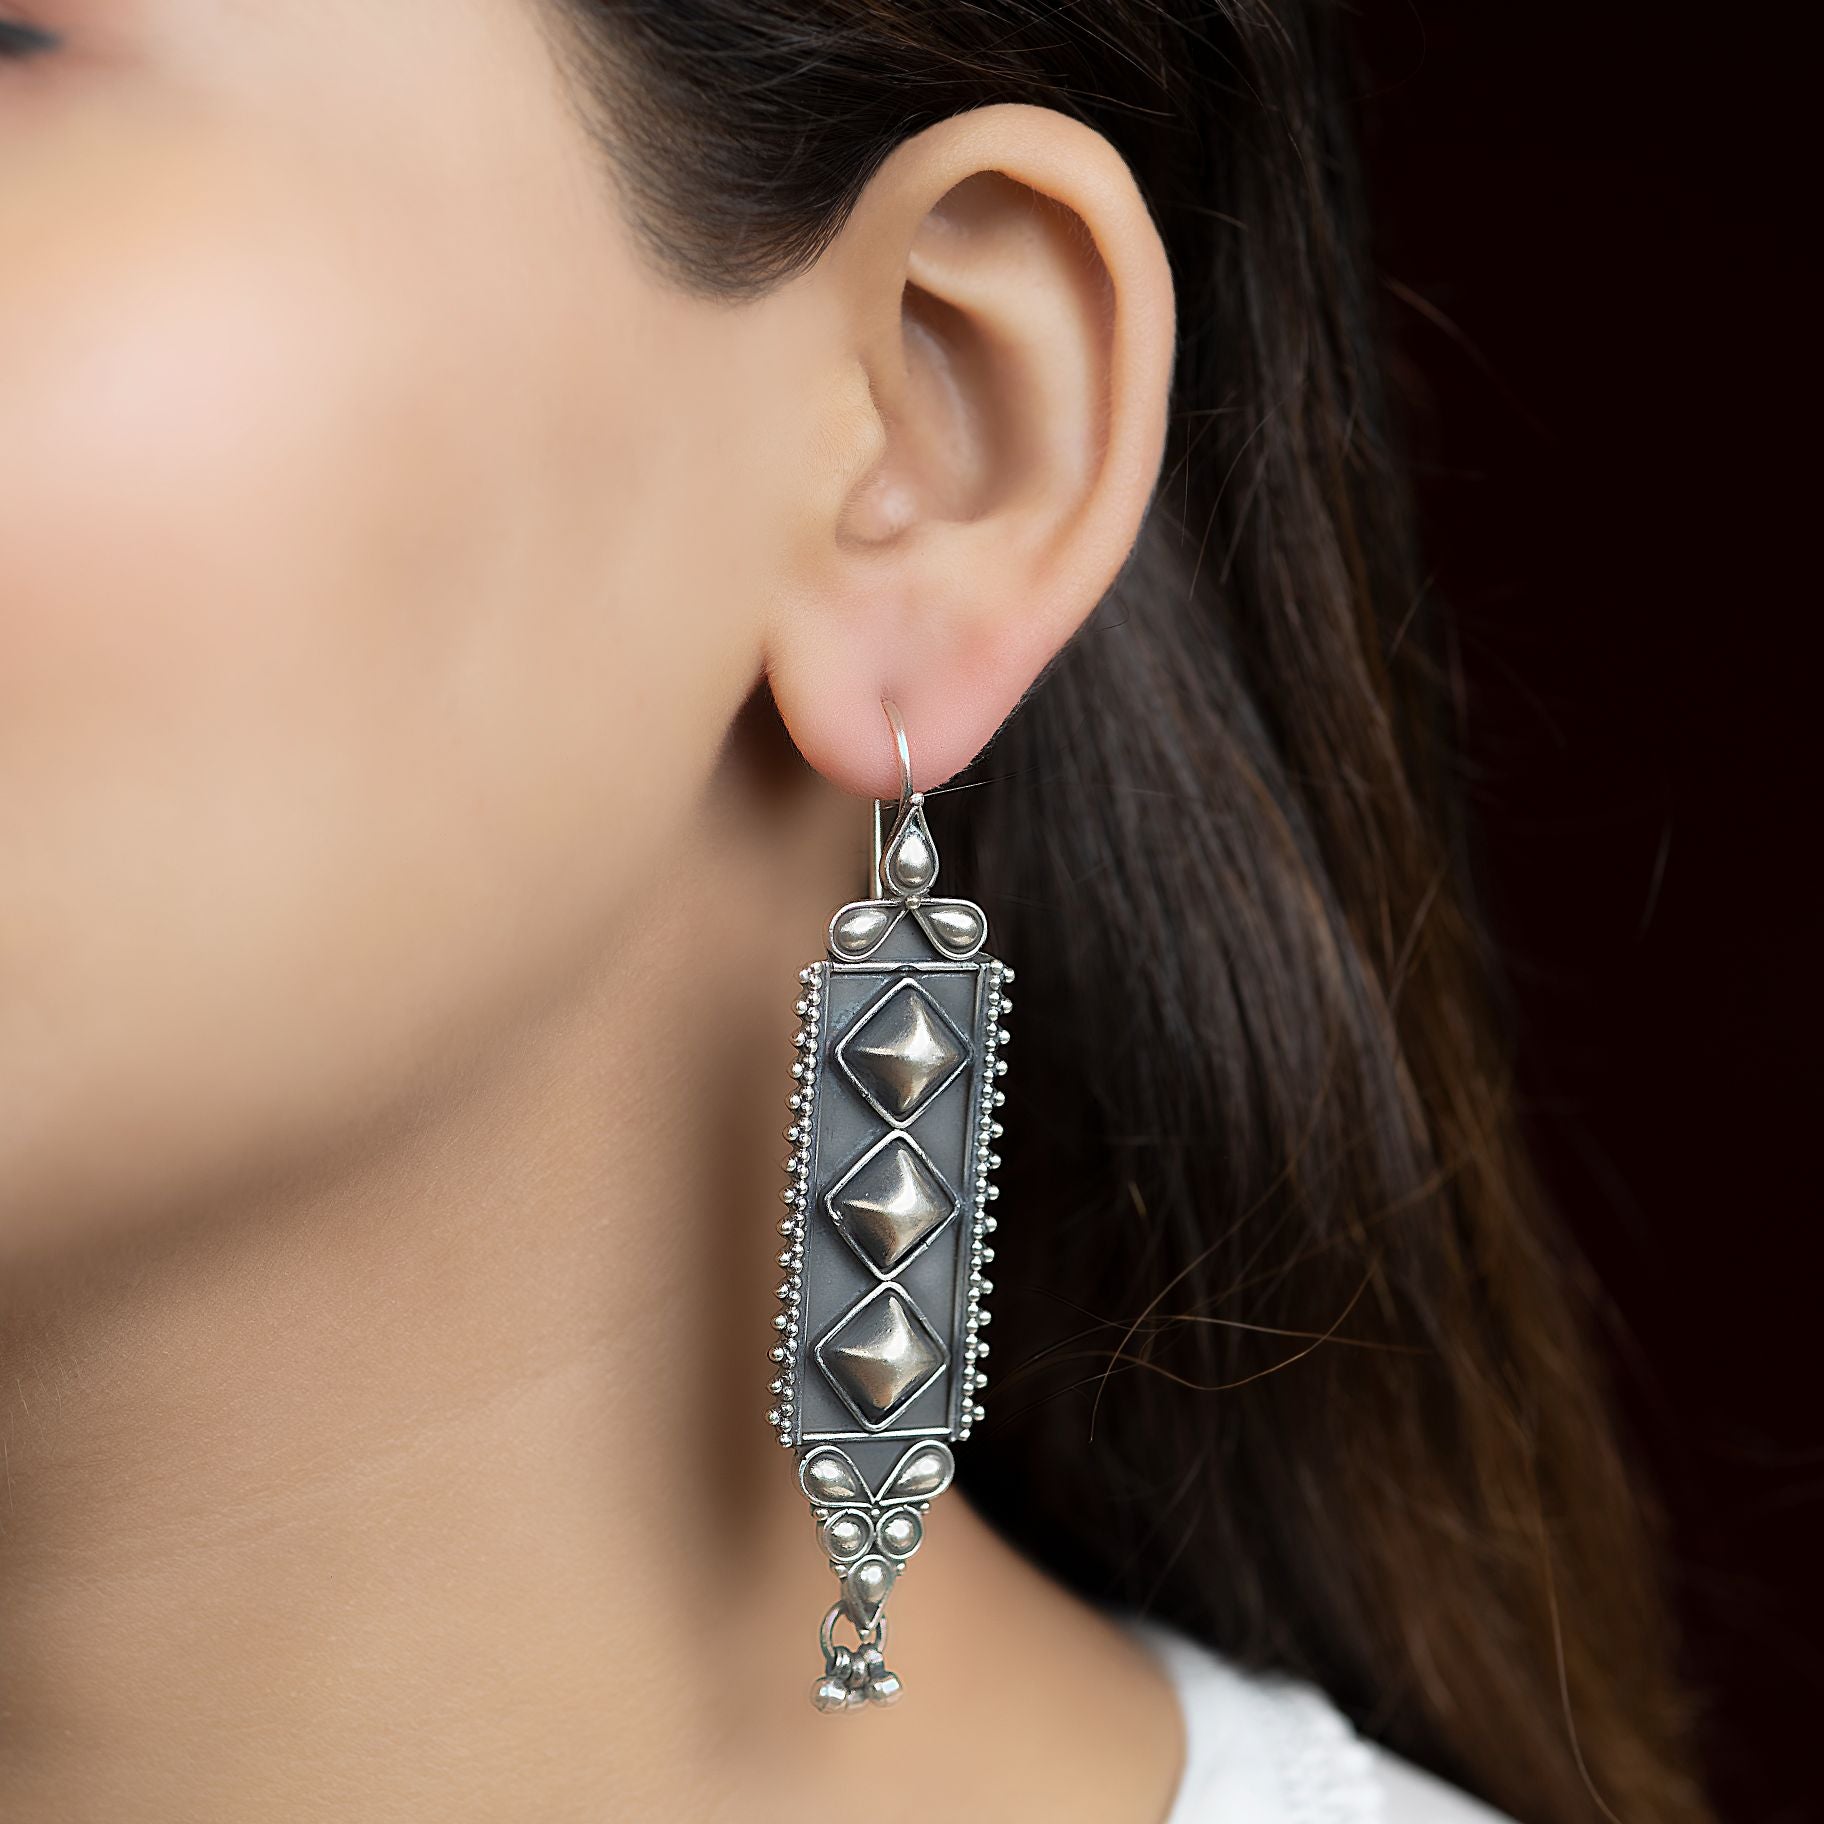 Rectangular Unique Dangler With Fine Droplet Earrings silverhousebyrj